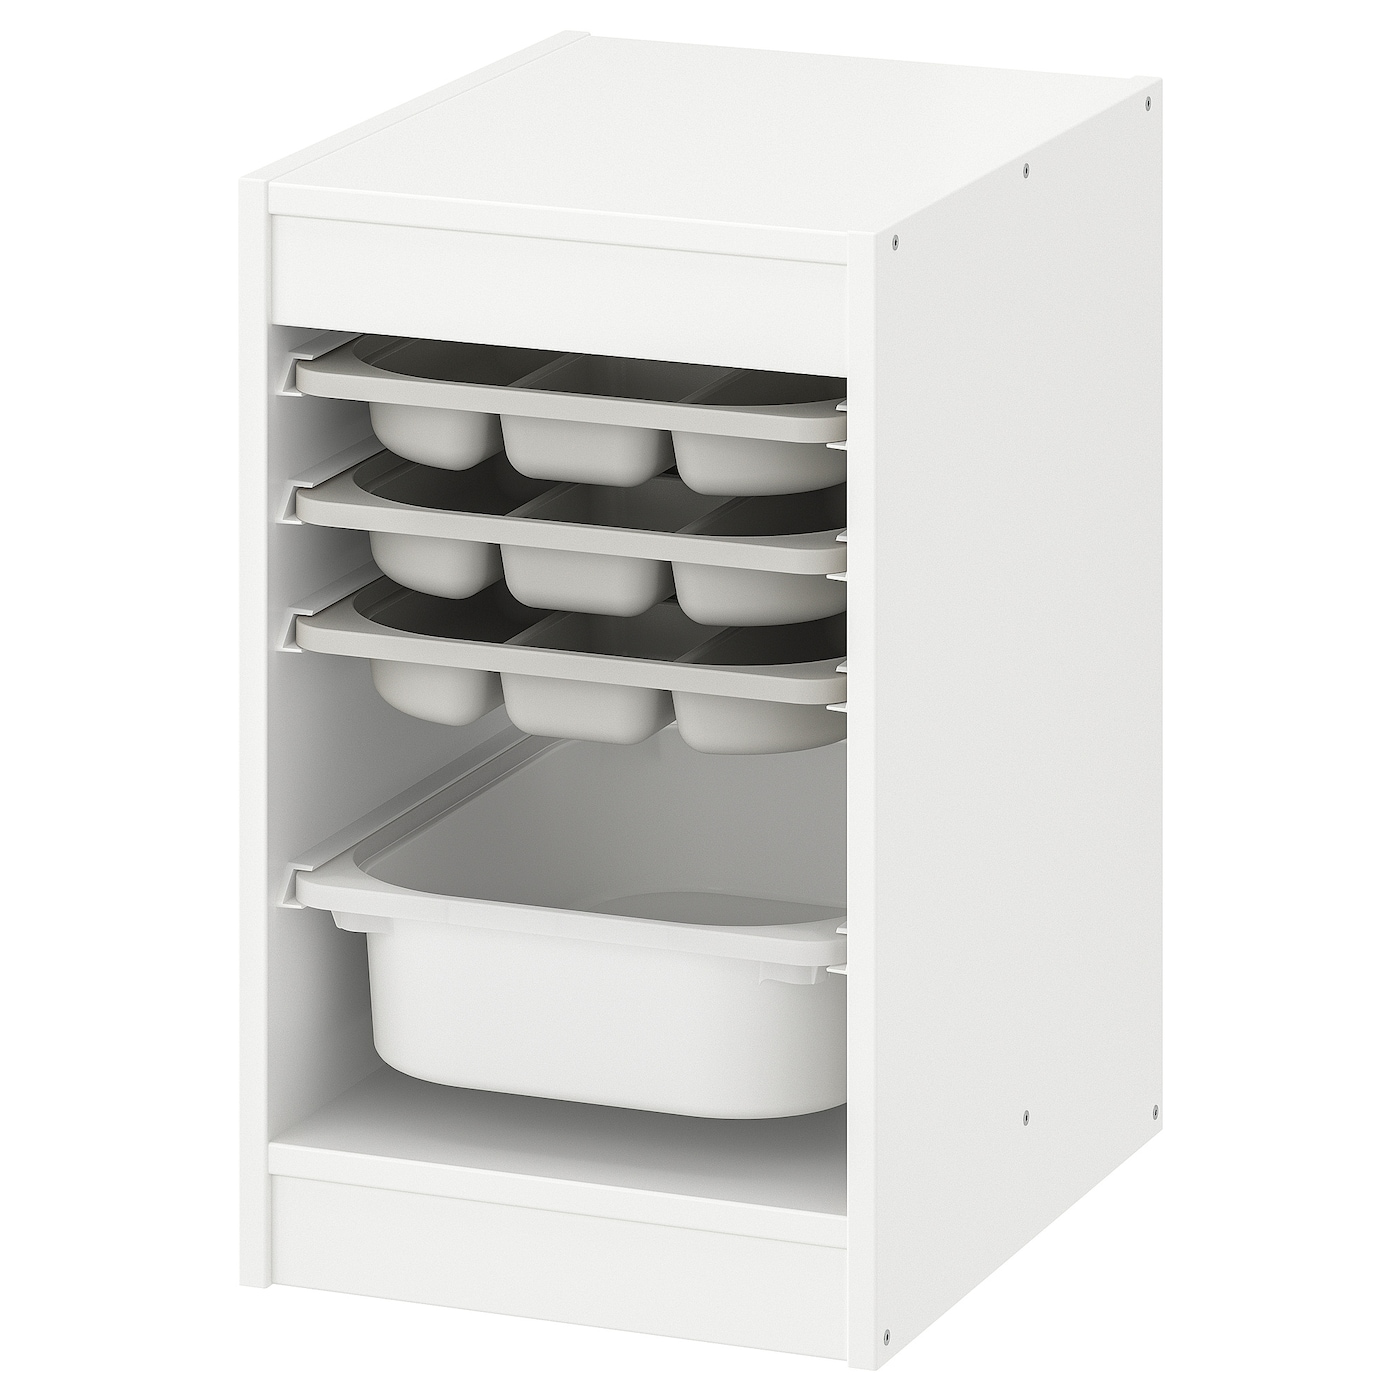 Стеллаж - IKEA TROFAST, 34х44х55 см, белый/серый, ТРУФАСТ ИКЕА